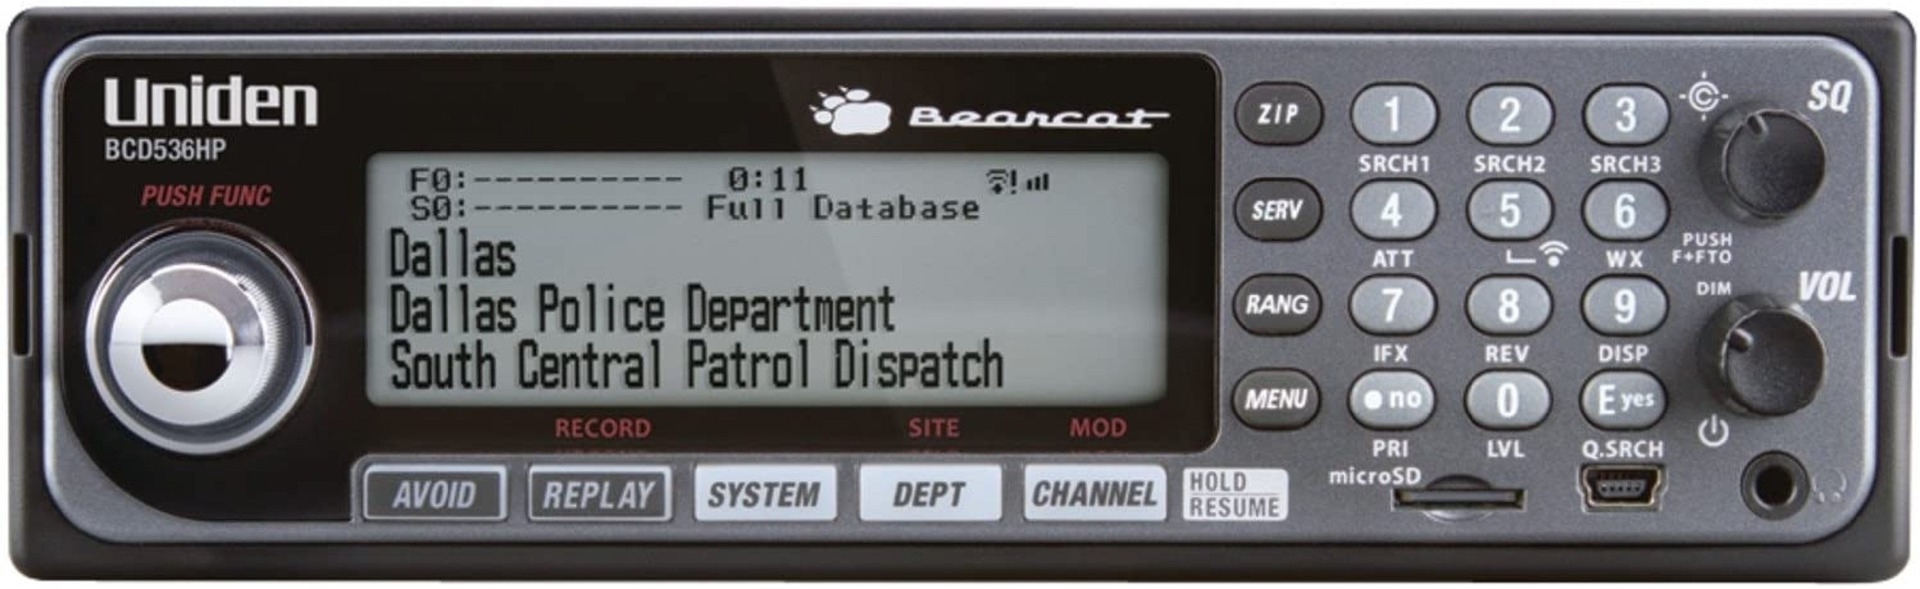 uniden police scanner